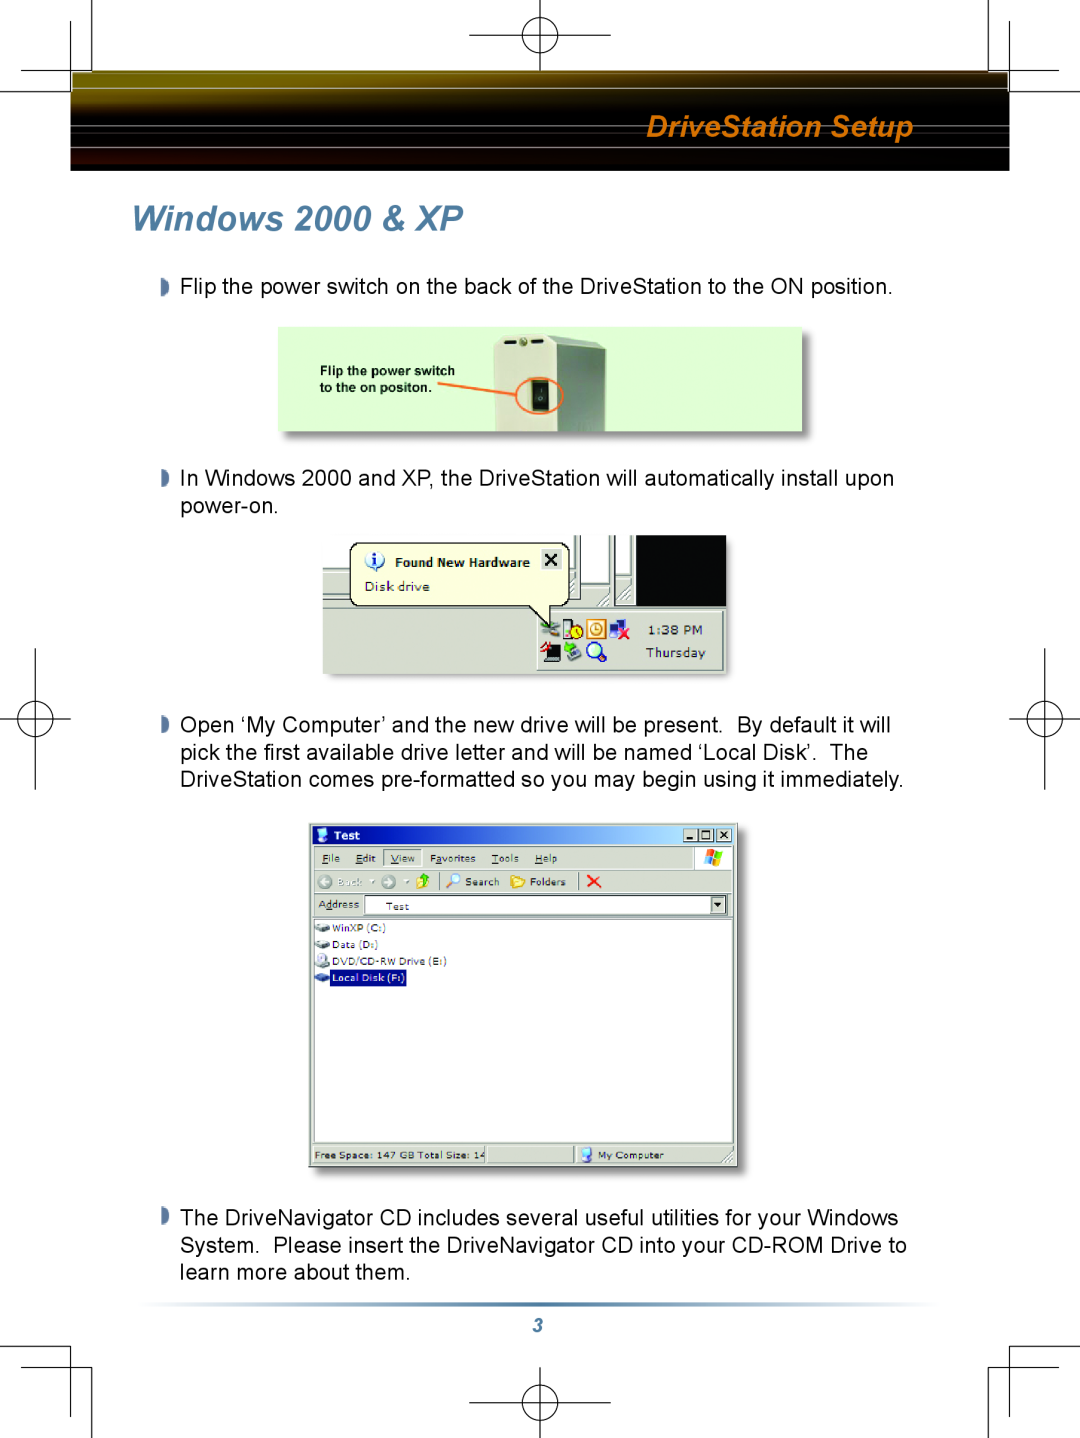 Buffalo Technology HD-HBU2 setup guide Windows 2000 & XP, DriveStation Setup 